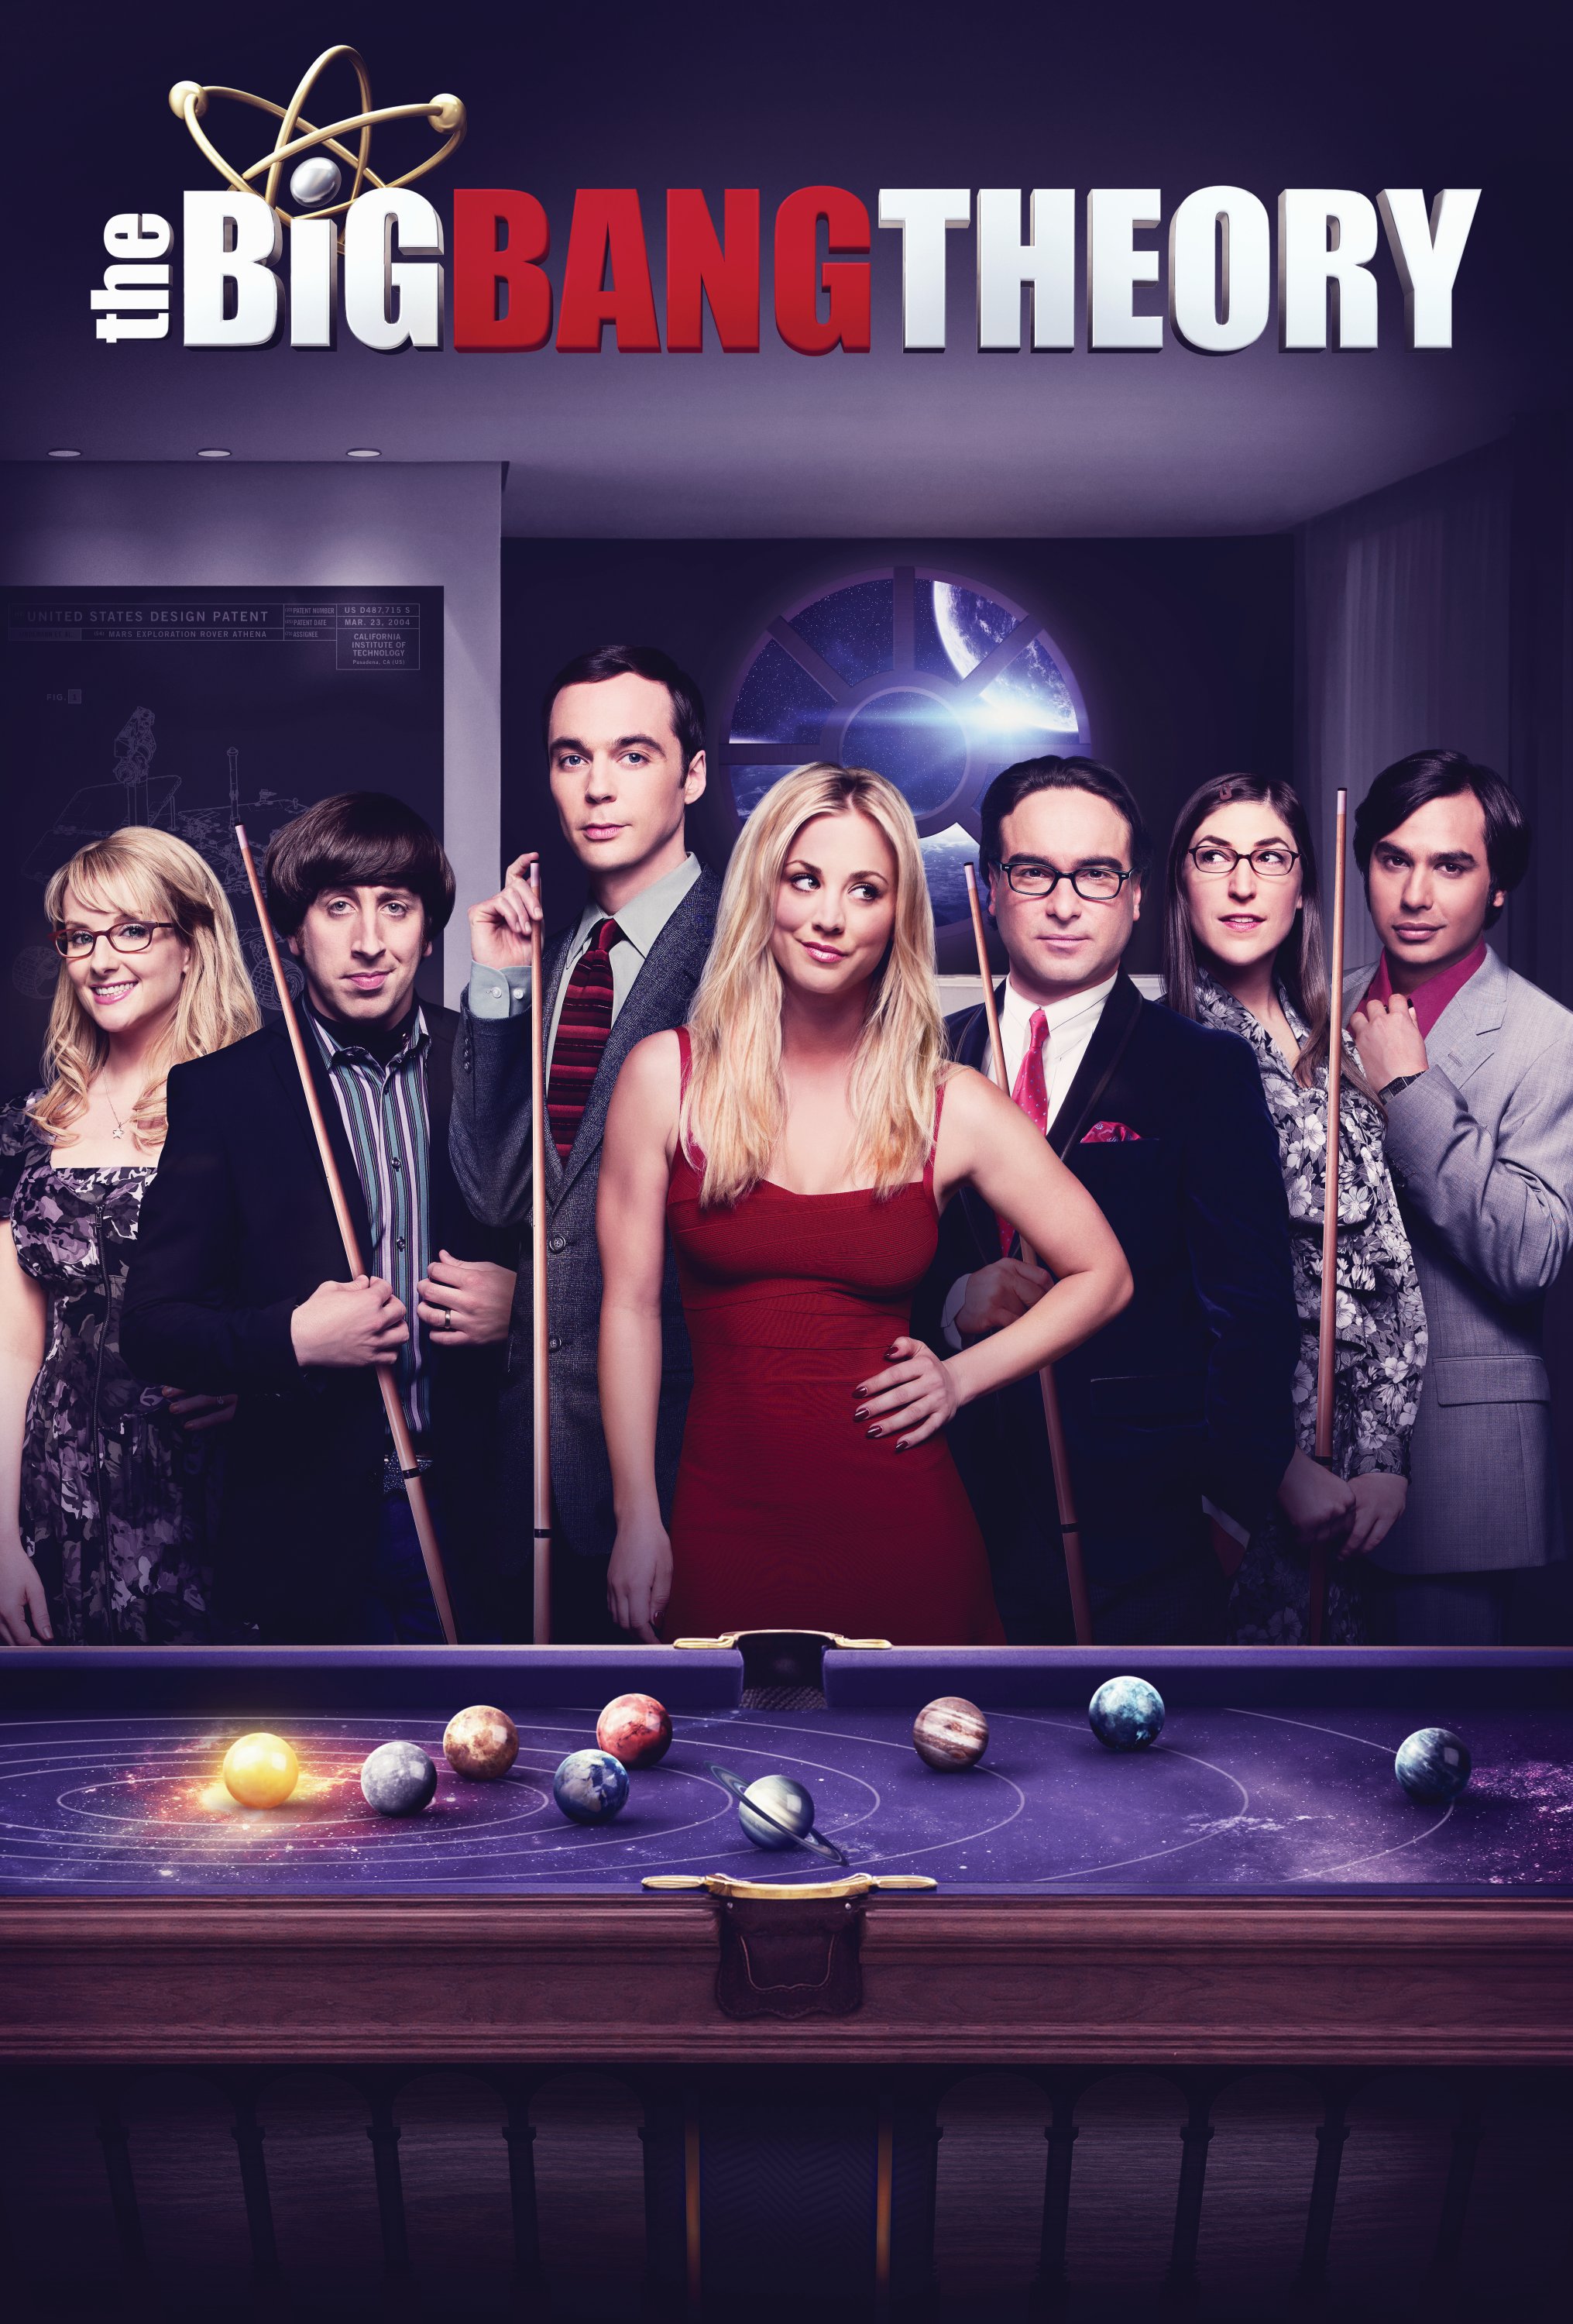 The Big Bang Theory S11 E22